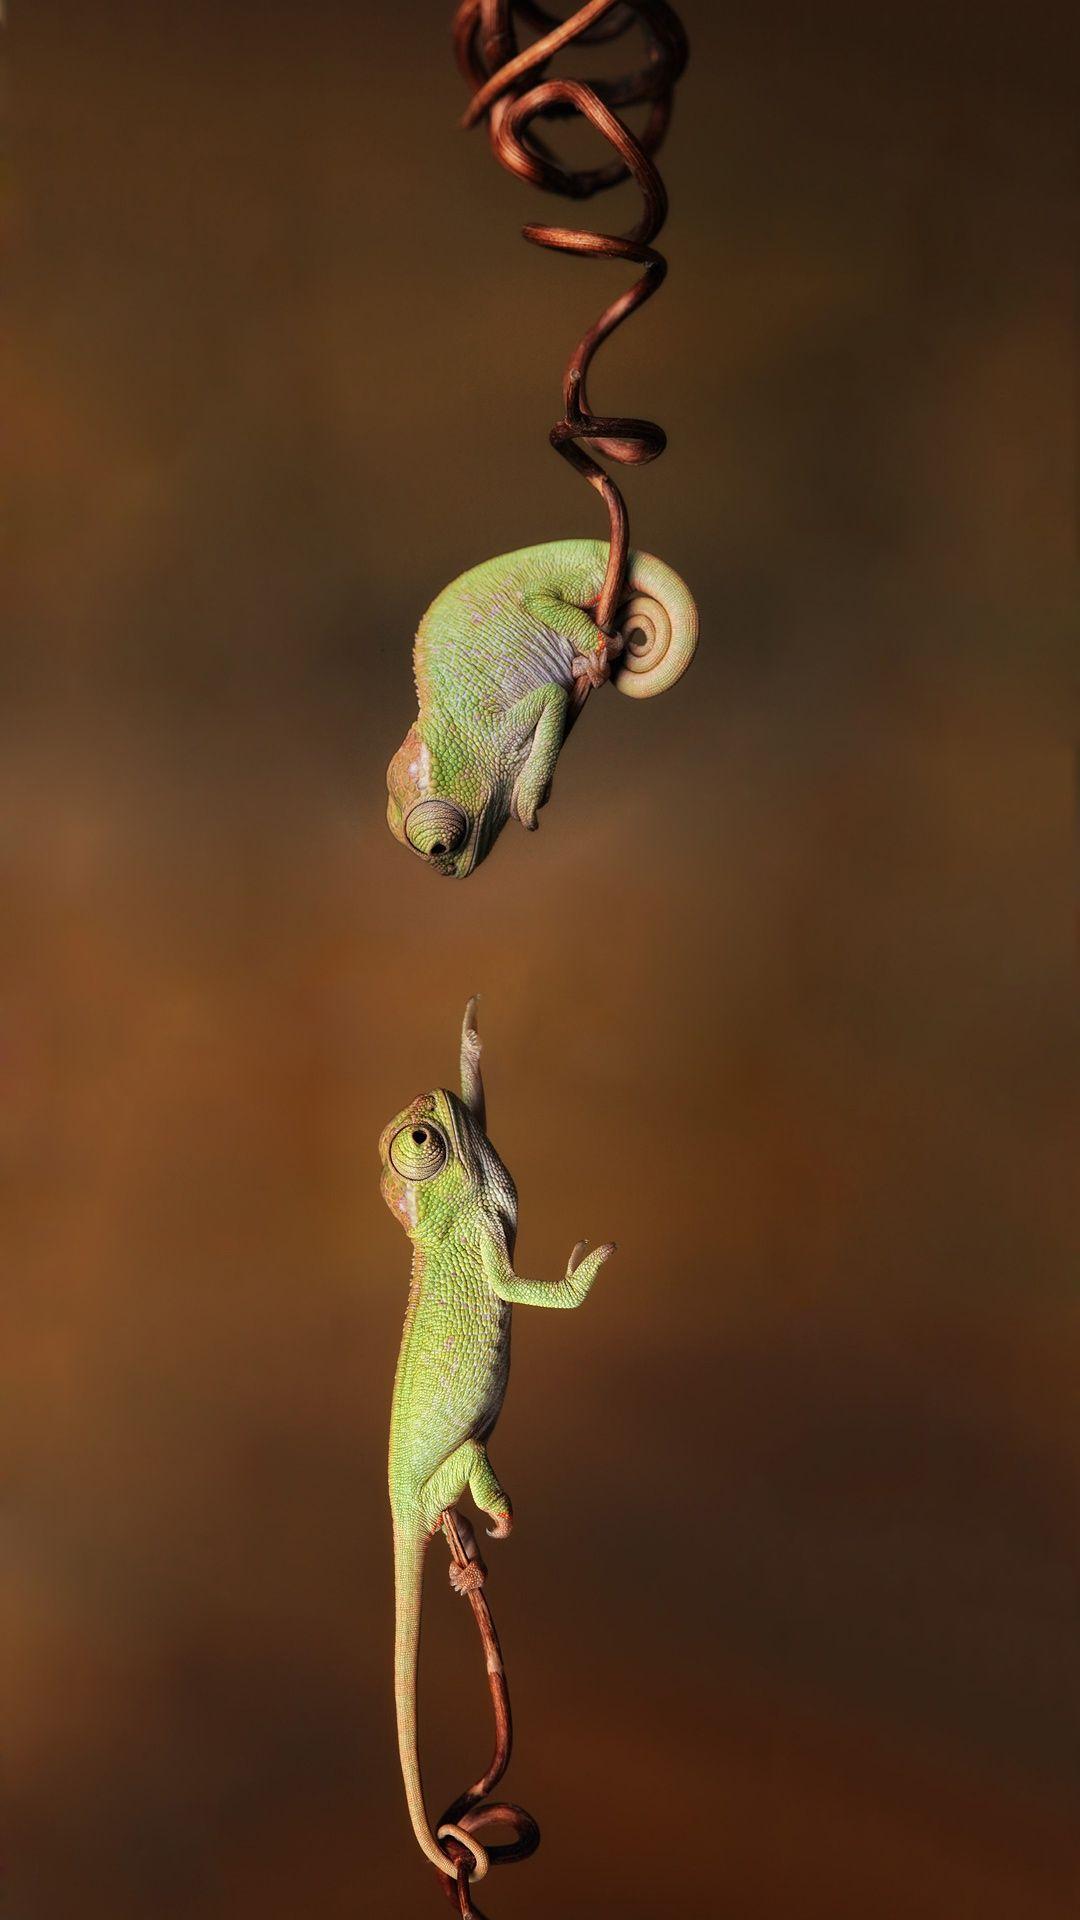 Cute Chameleon iPhone Wallpaper. iPhoneWallpaper